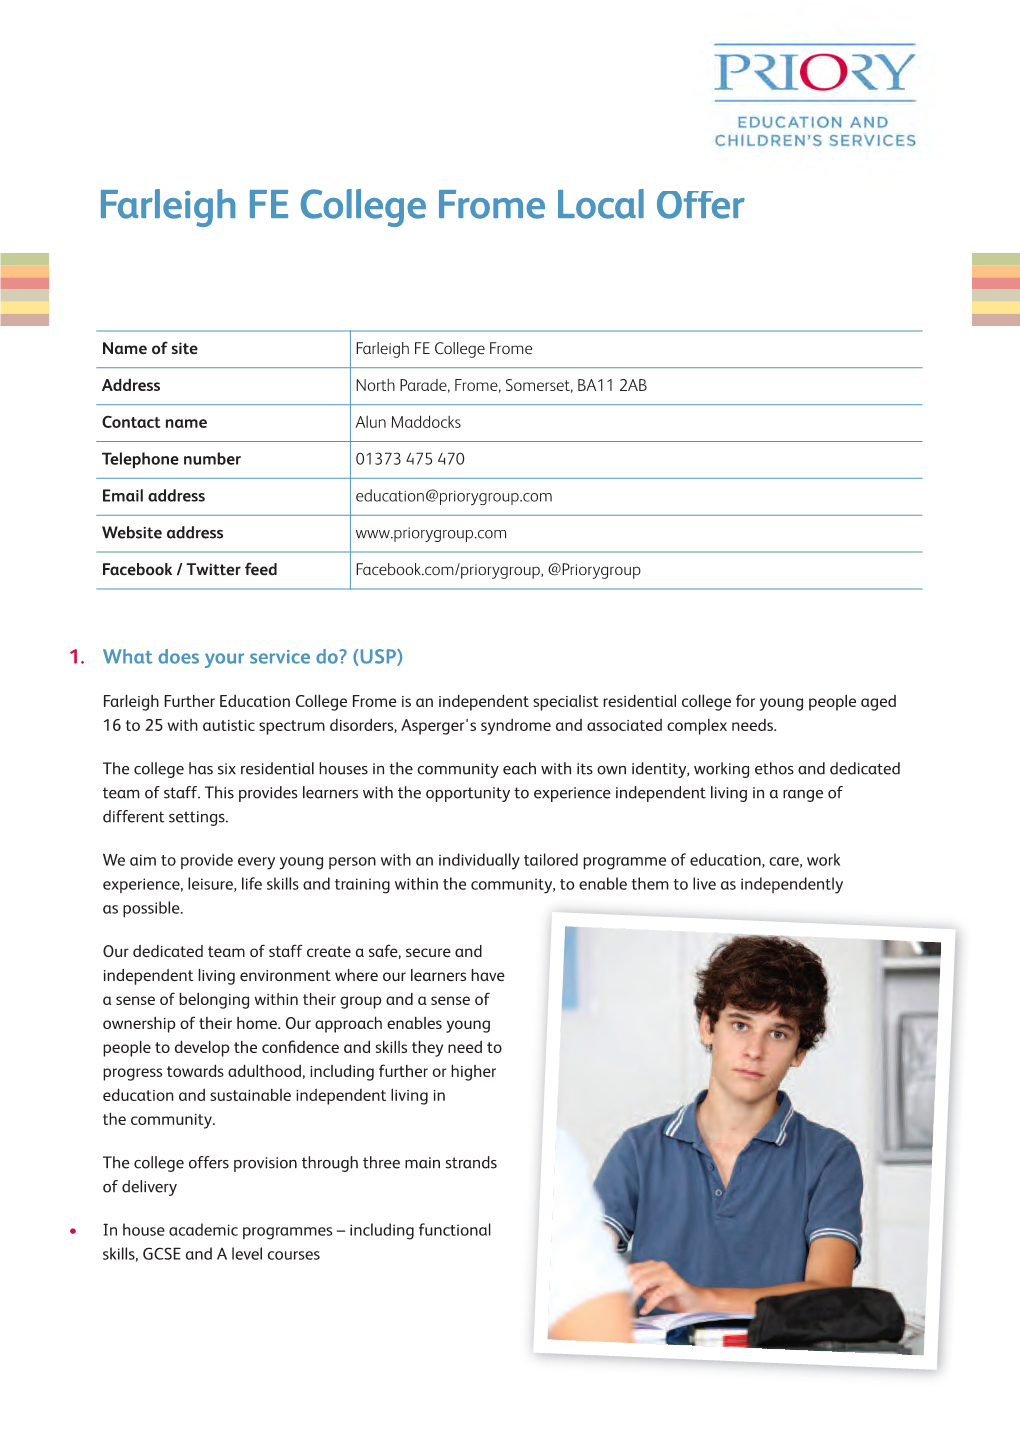 Farleigh Further Education College